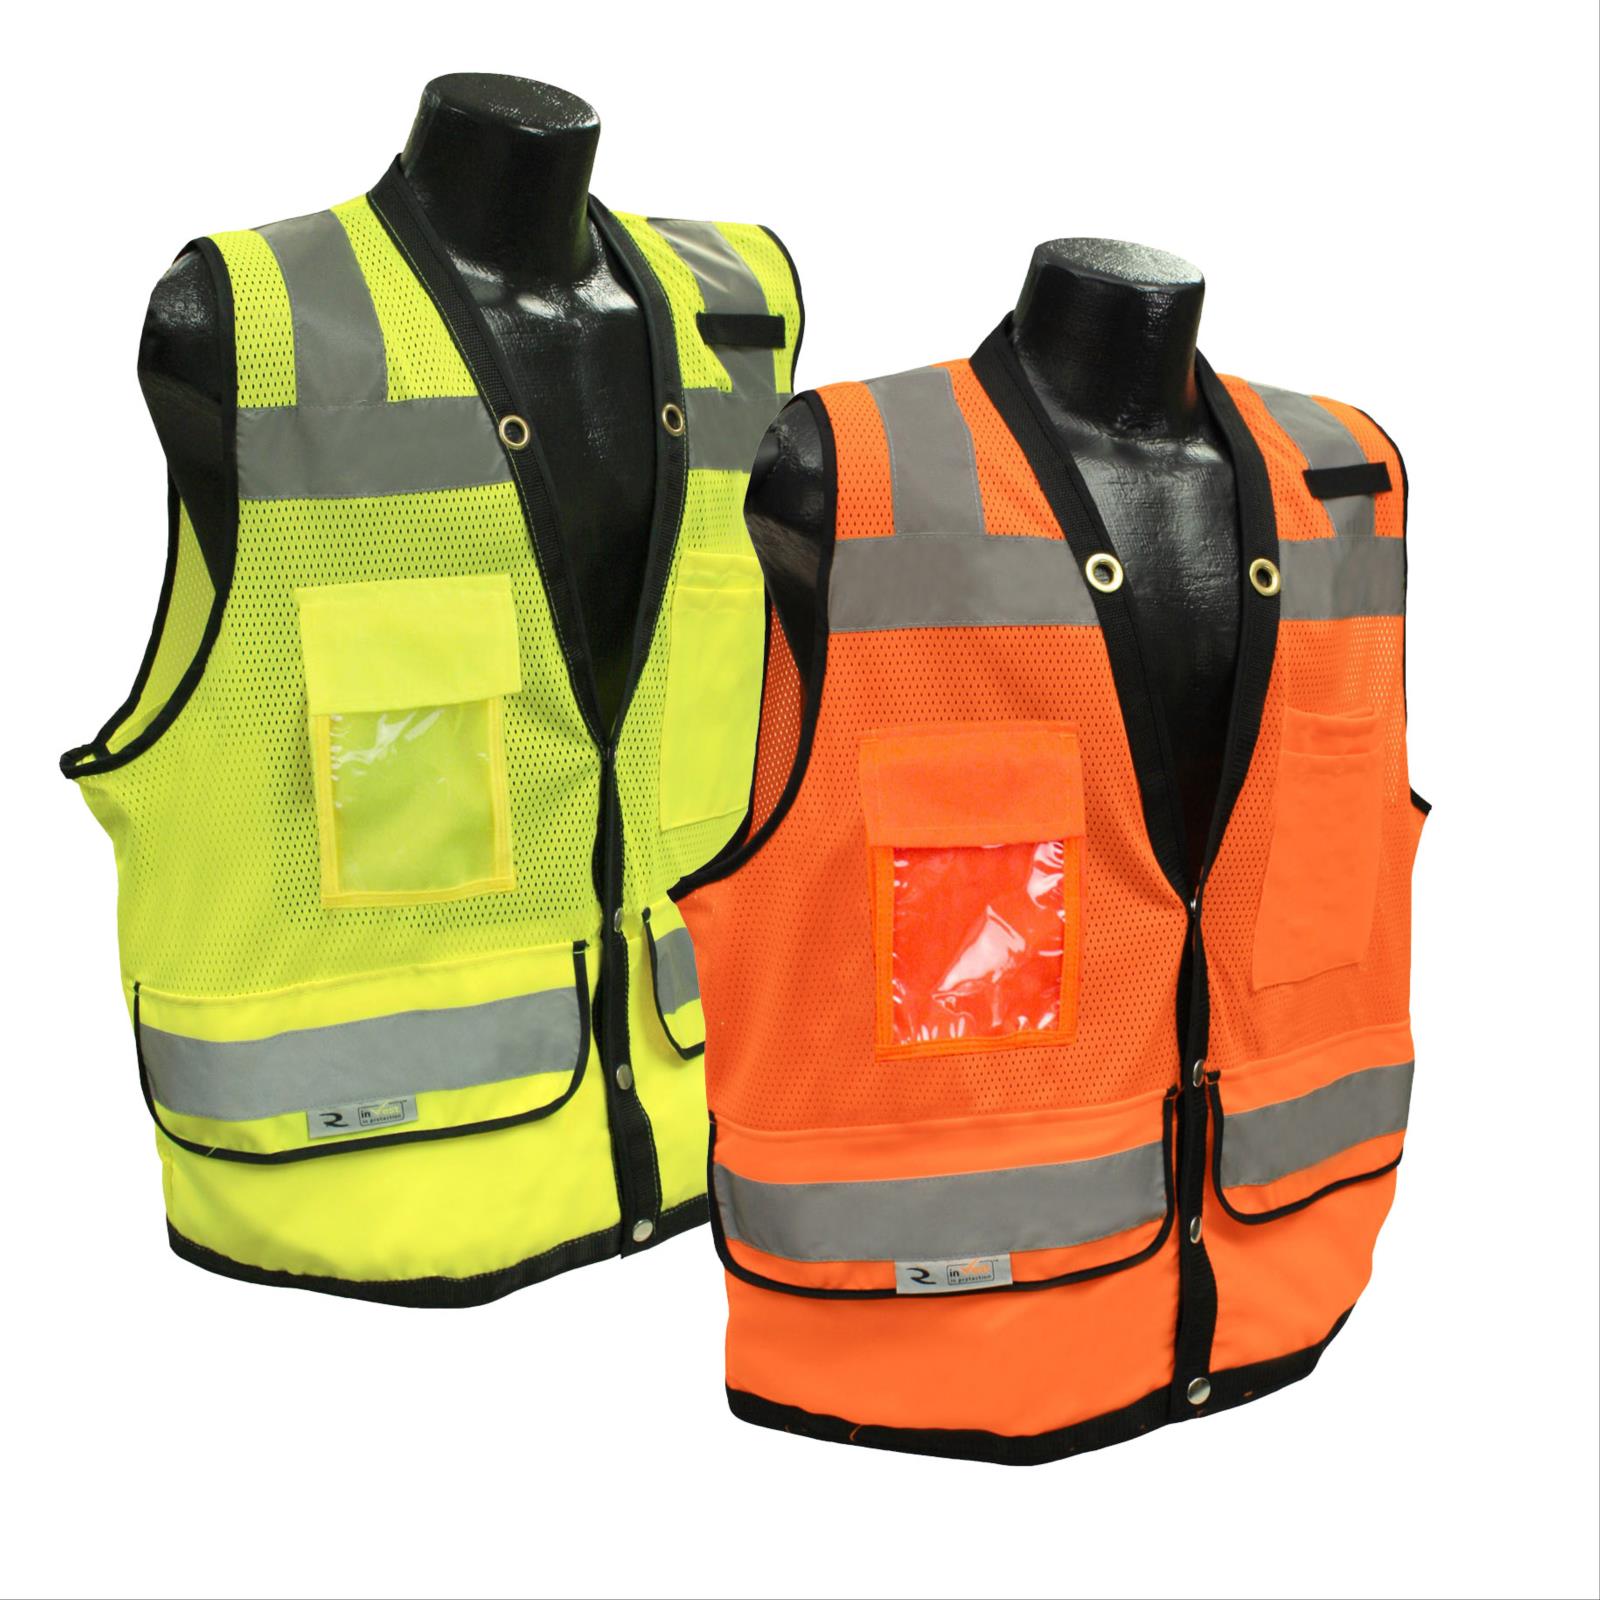 Radwear™ SV59 Heavy-Duty Surveyors Vests, Class 2 Type R